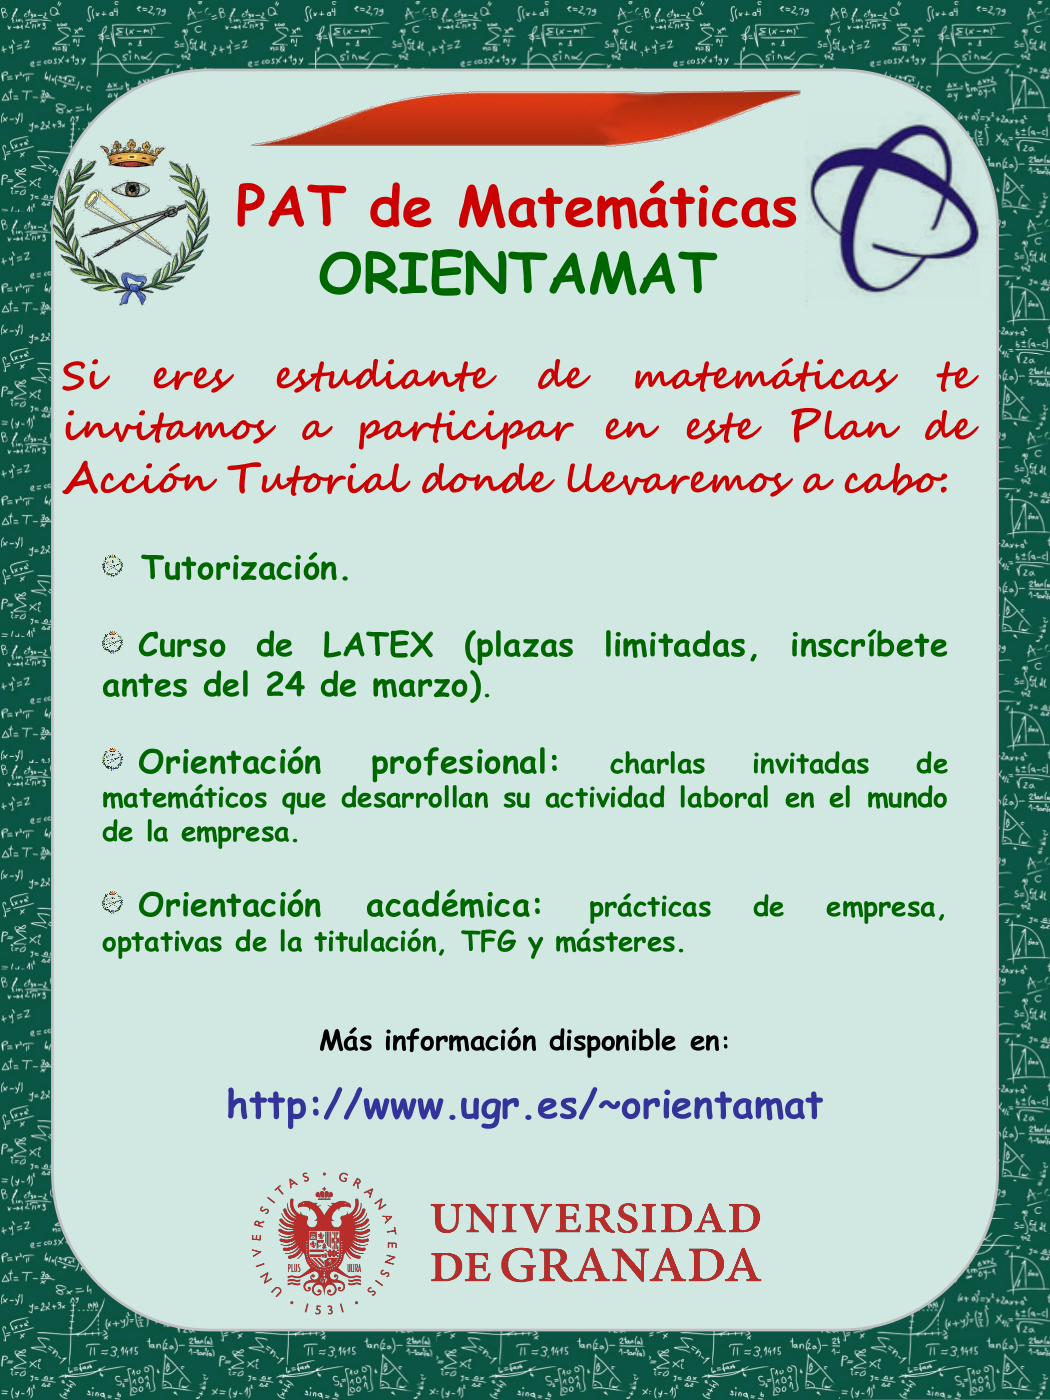 PAT de Matemáticas ORIENTAMAT